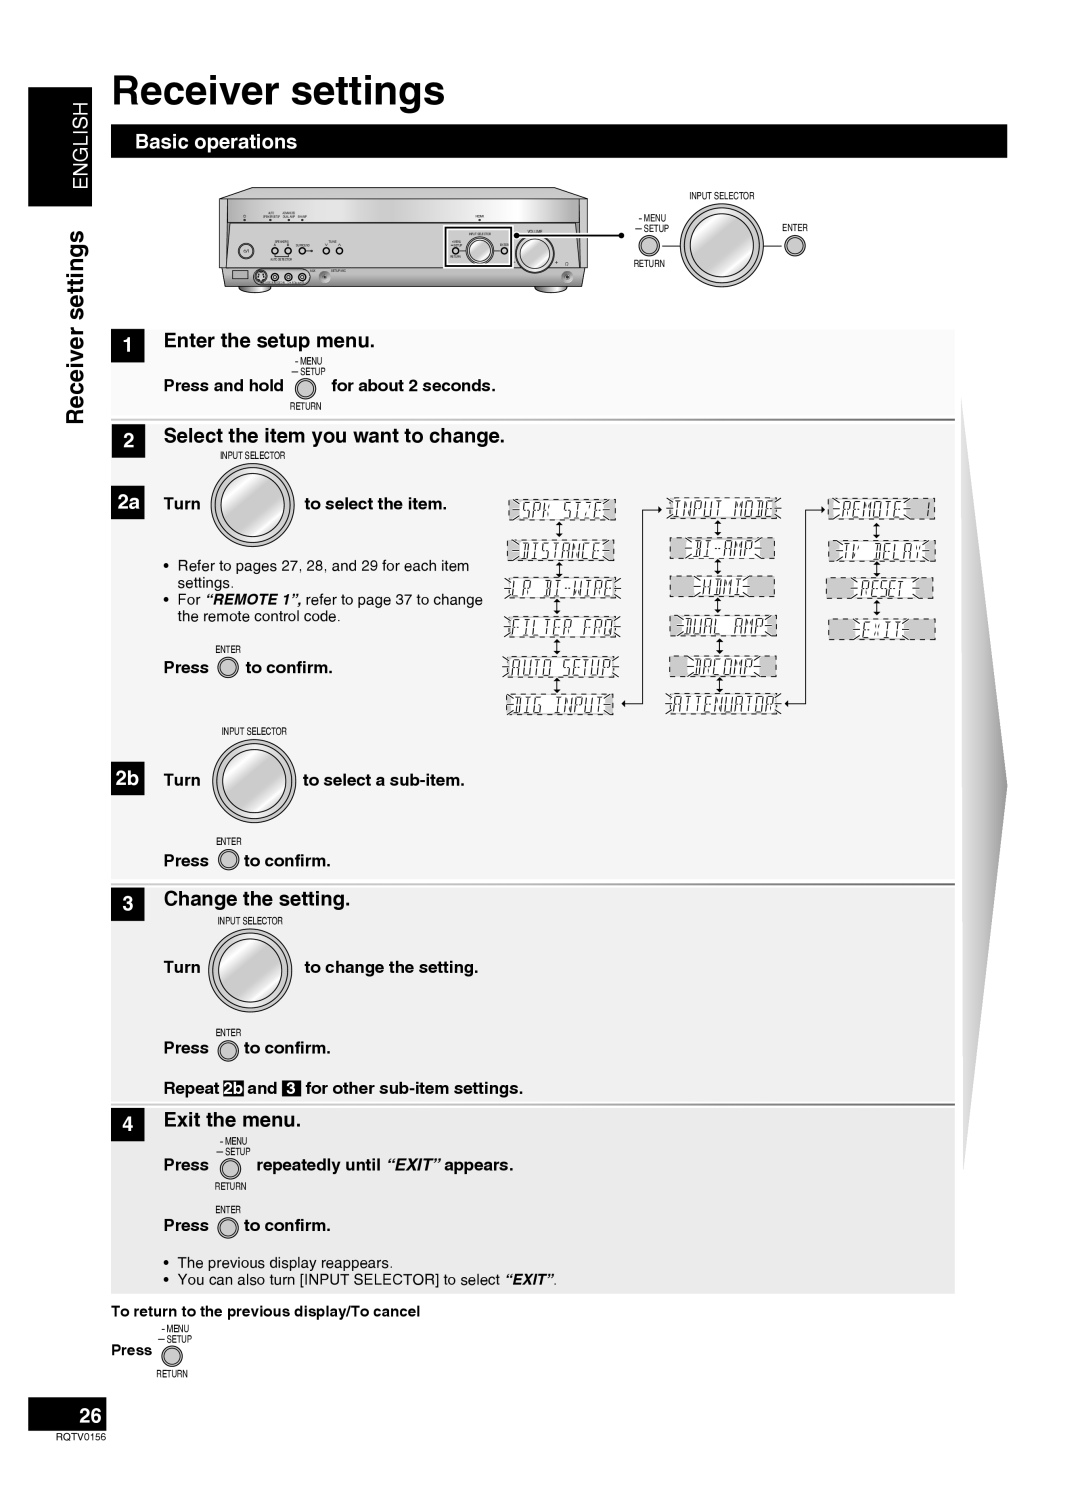 Panasonic SA-XR58 manual Receiver settings, settings ENGLISH, Basic operations, 1Enter the setup menu, 3Change the setting 